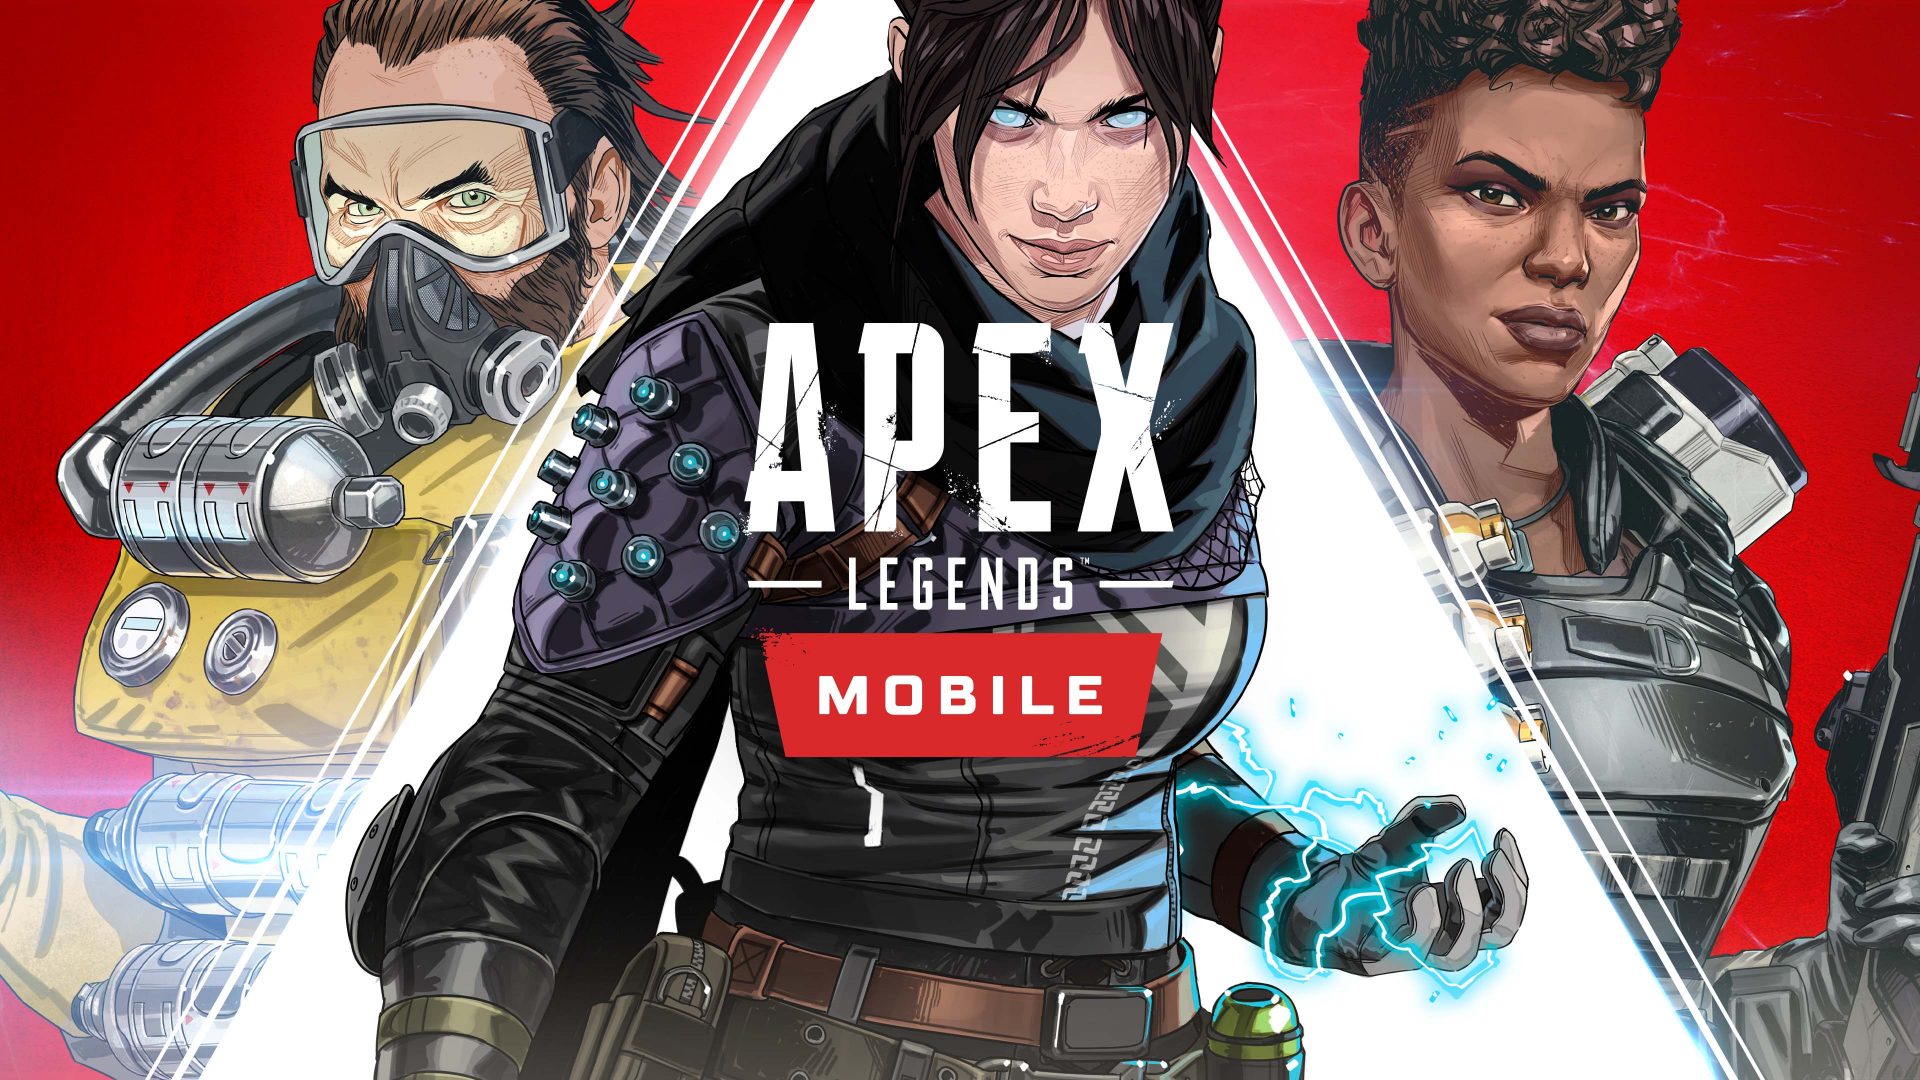 Apex Legends Mobile – NoxPlayer